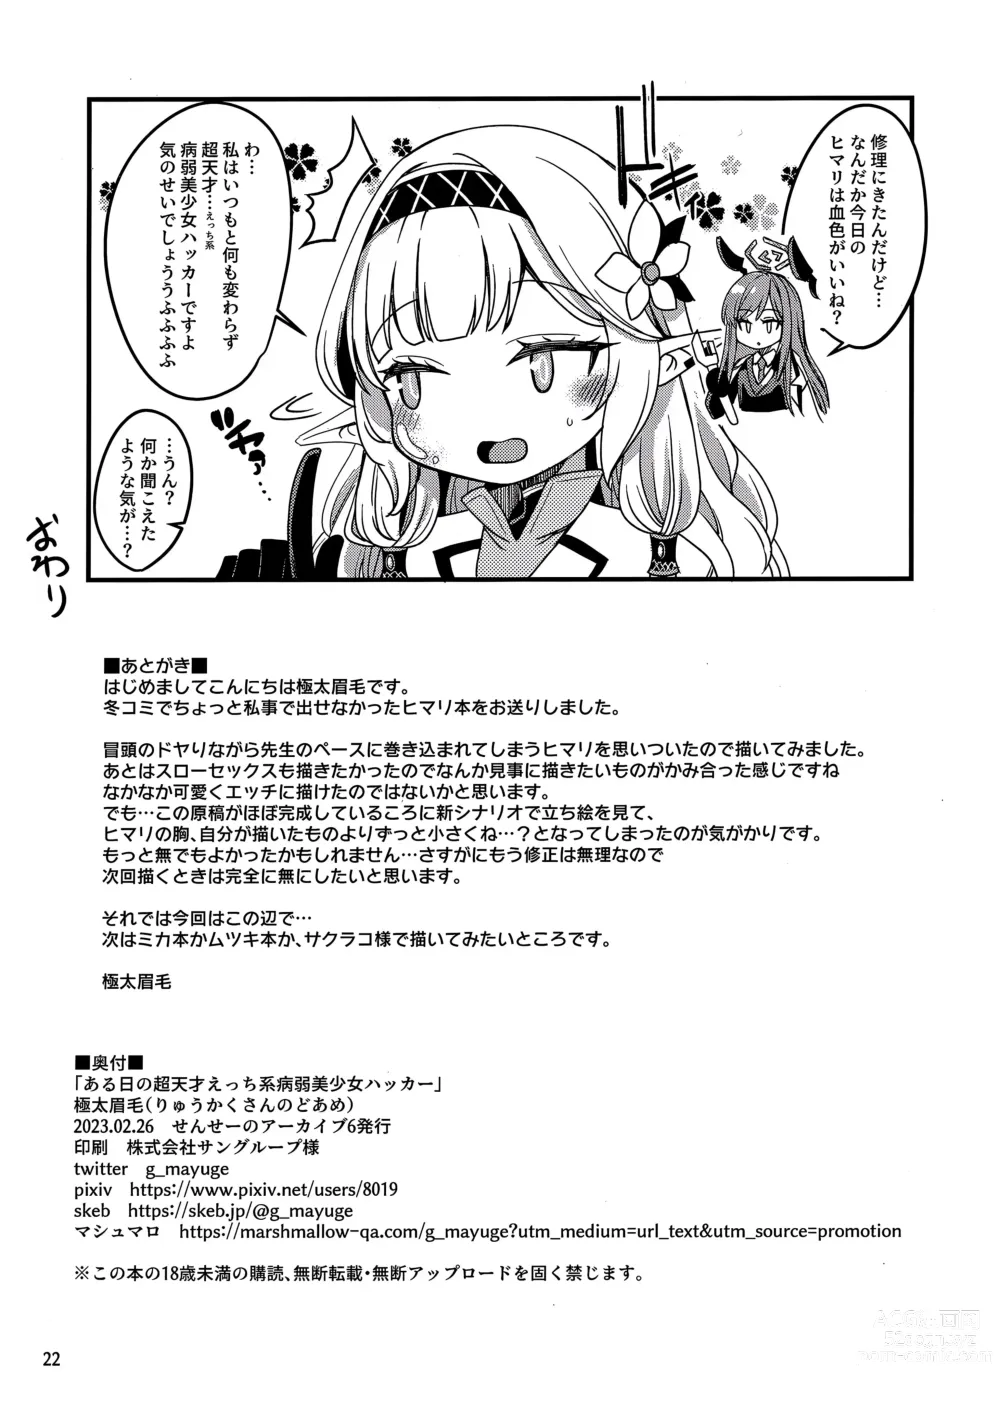 Page 21 of doujinshi Aru Hi no Chou Tensai Ecchi Kei Byoujaku Bishoujo Hacker